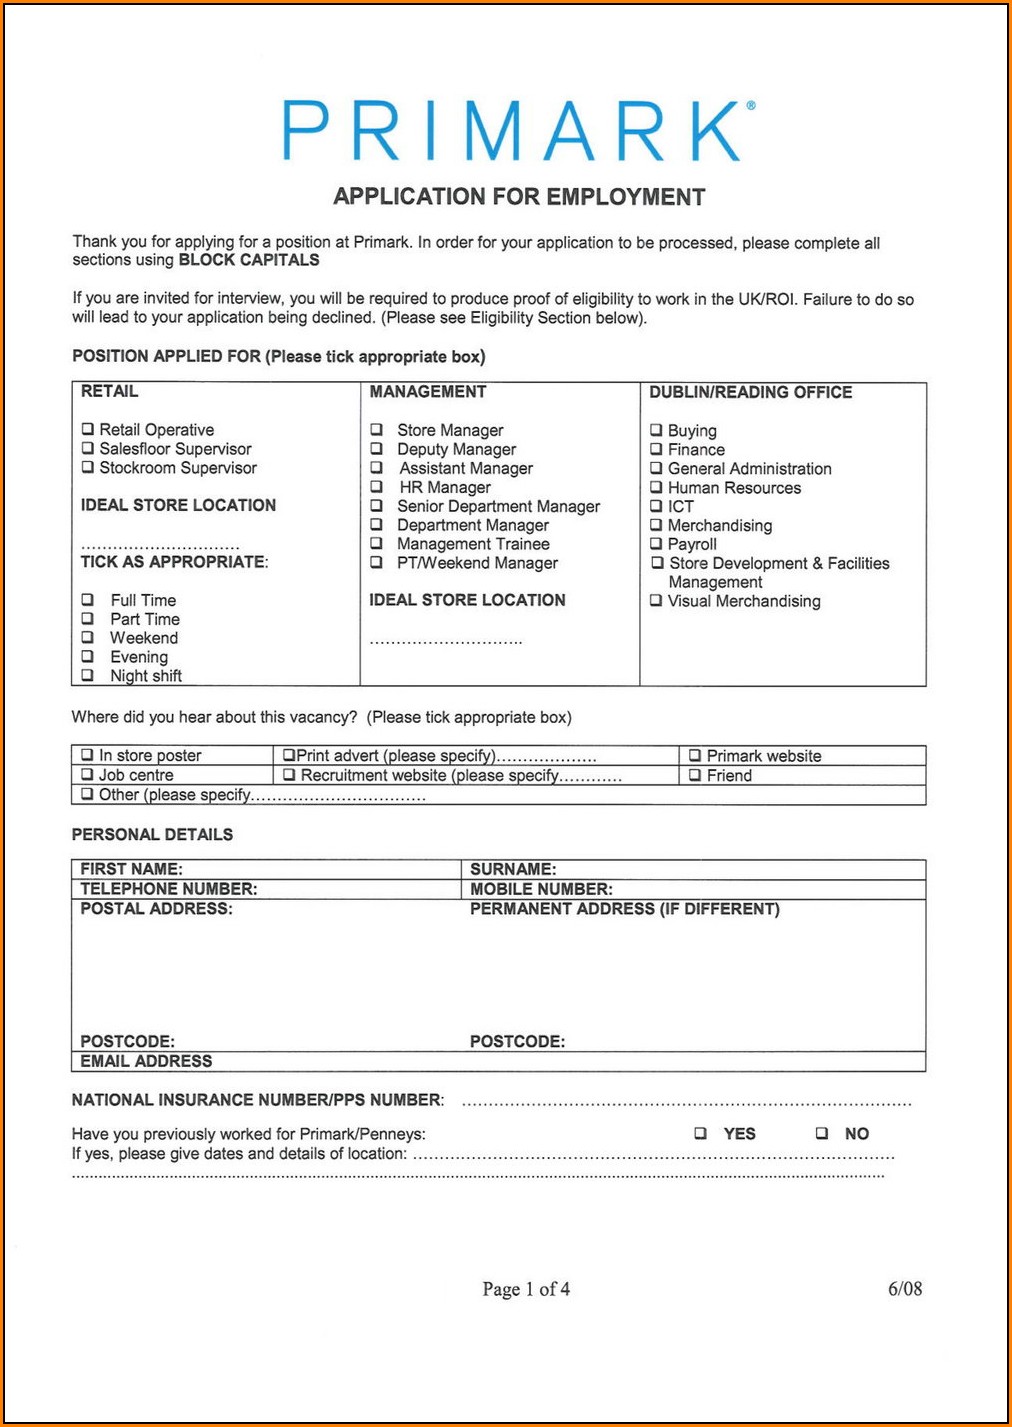 Primark Jobs Application Form